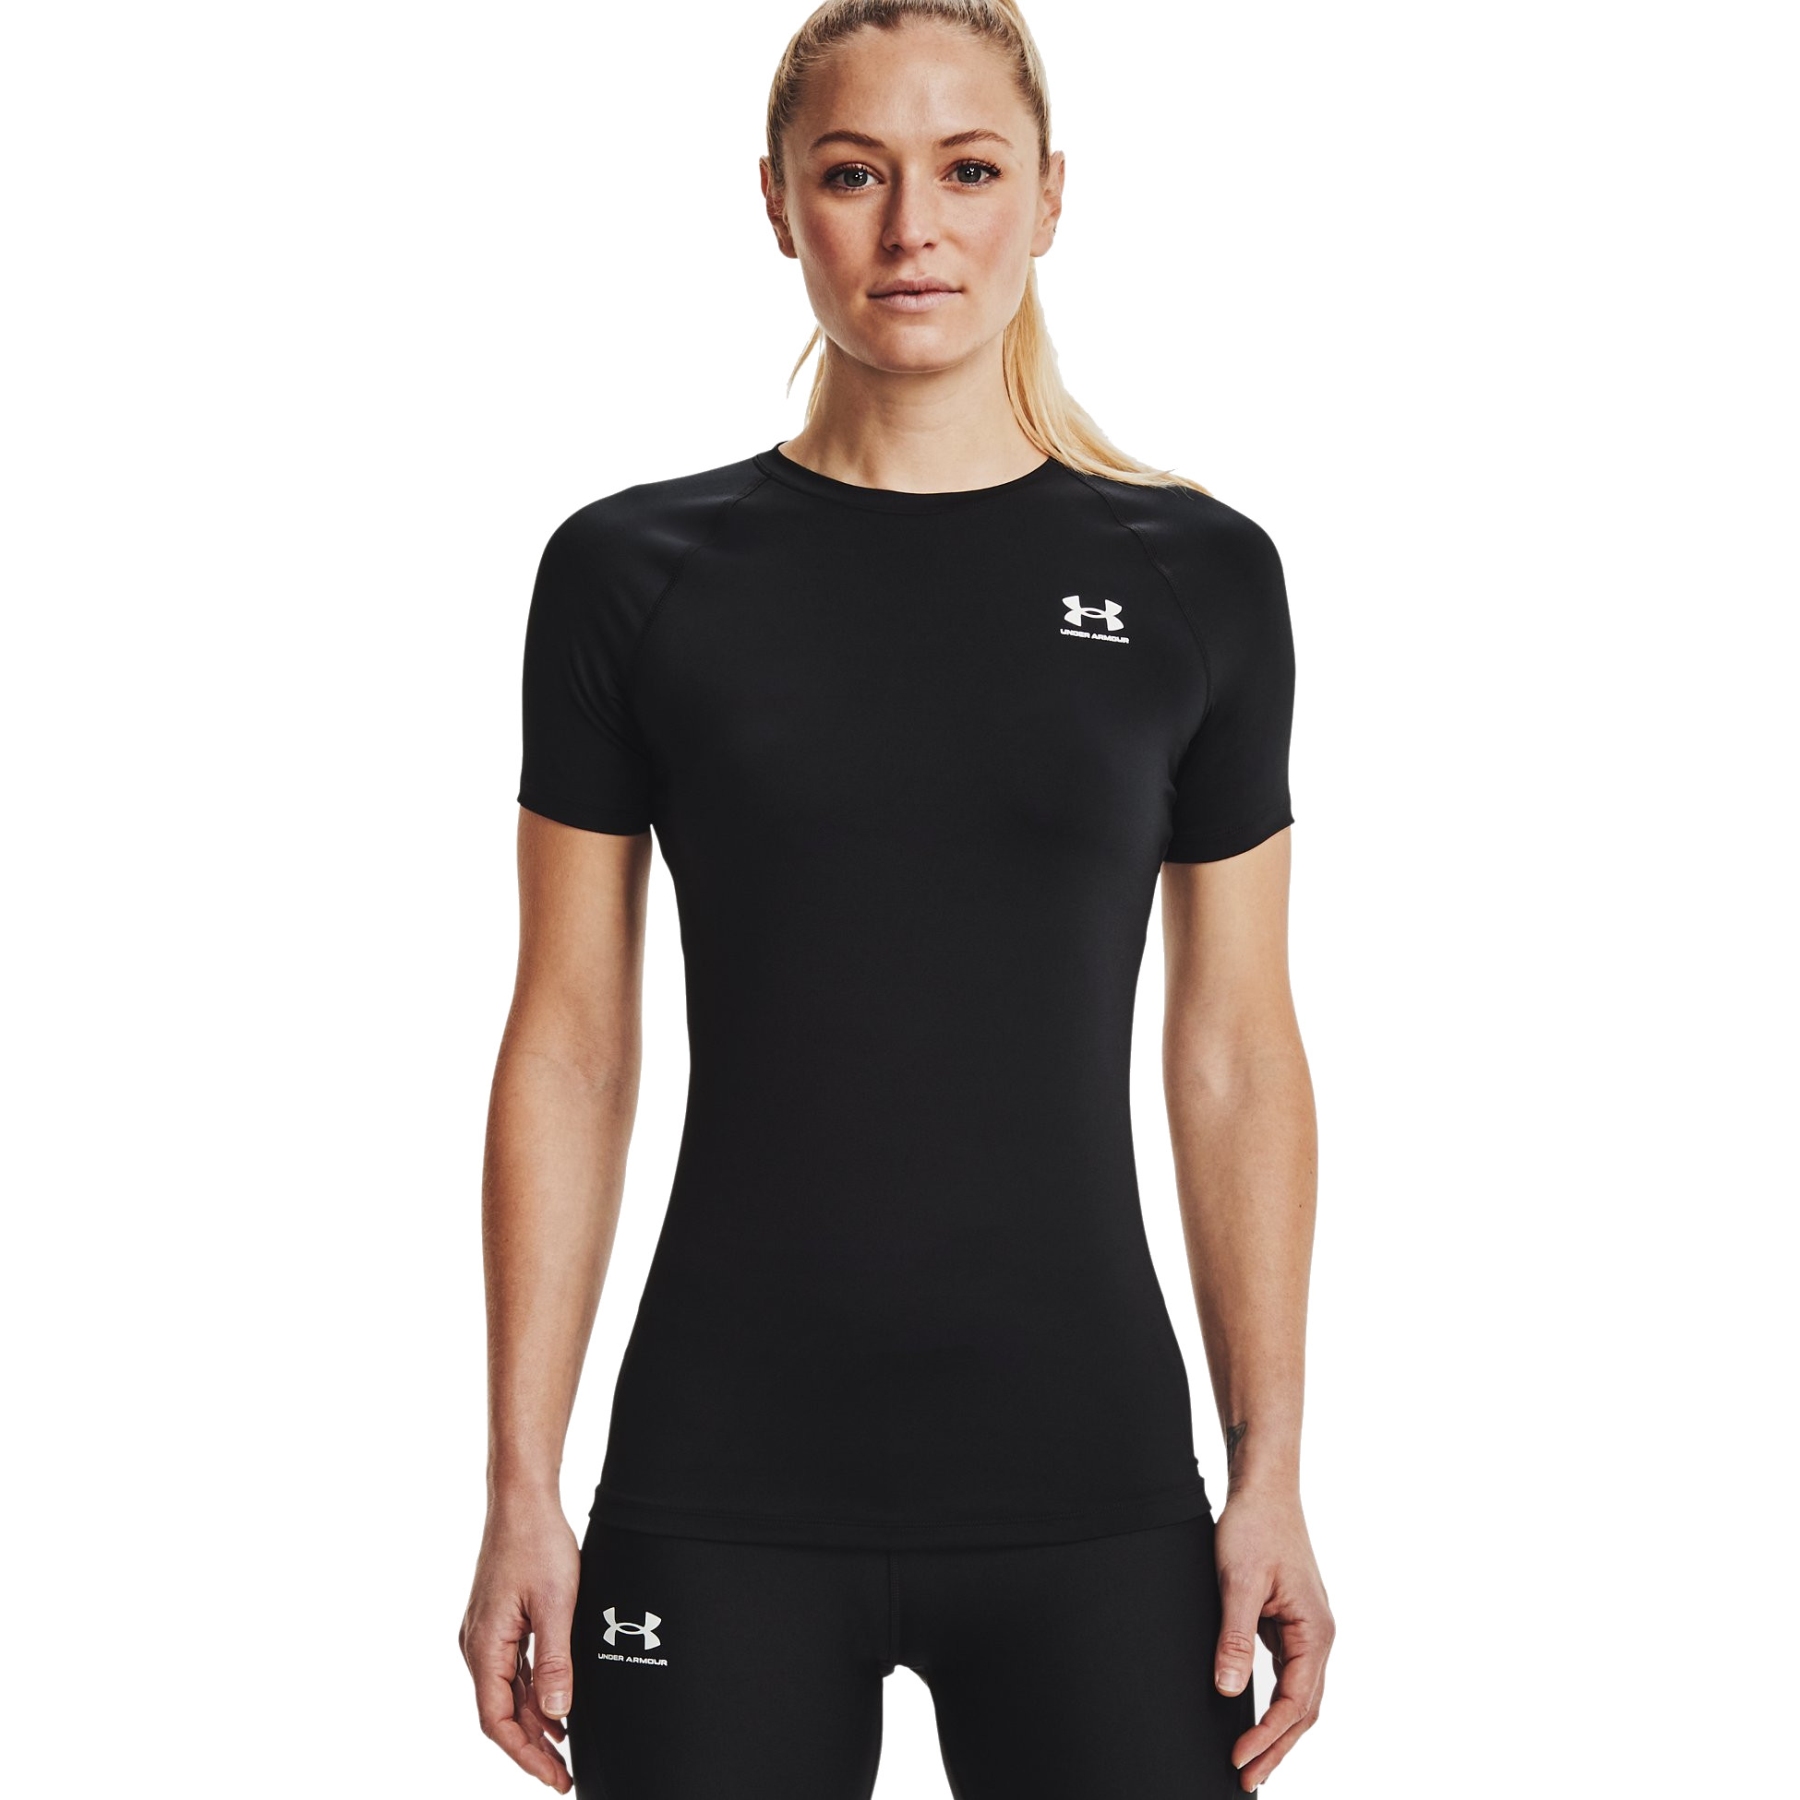 https://images.bike24.com/i/mb/97/71/28/under-armour-heatgear-compression-short-sleeve-shirt-women-black-white-1-1598504.jpg